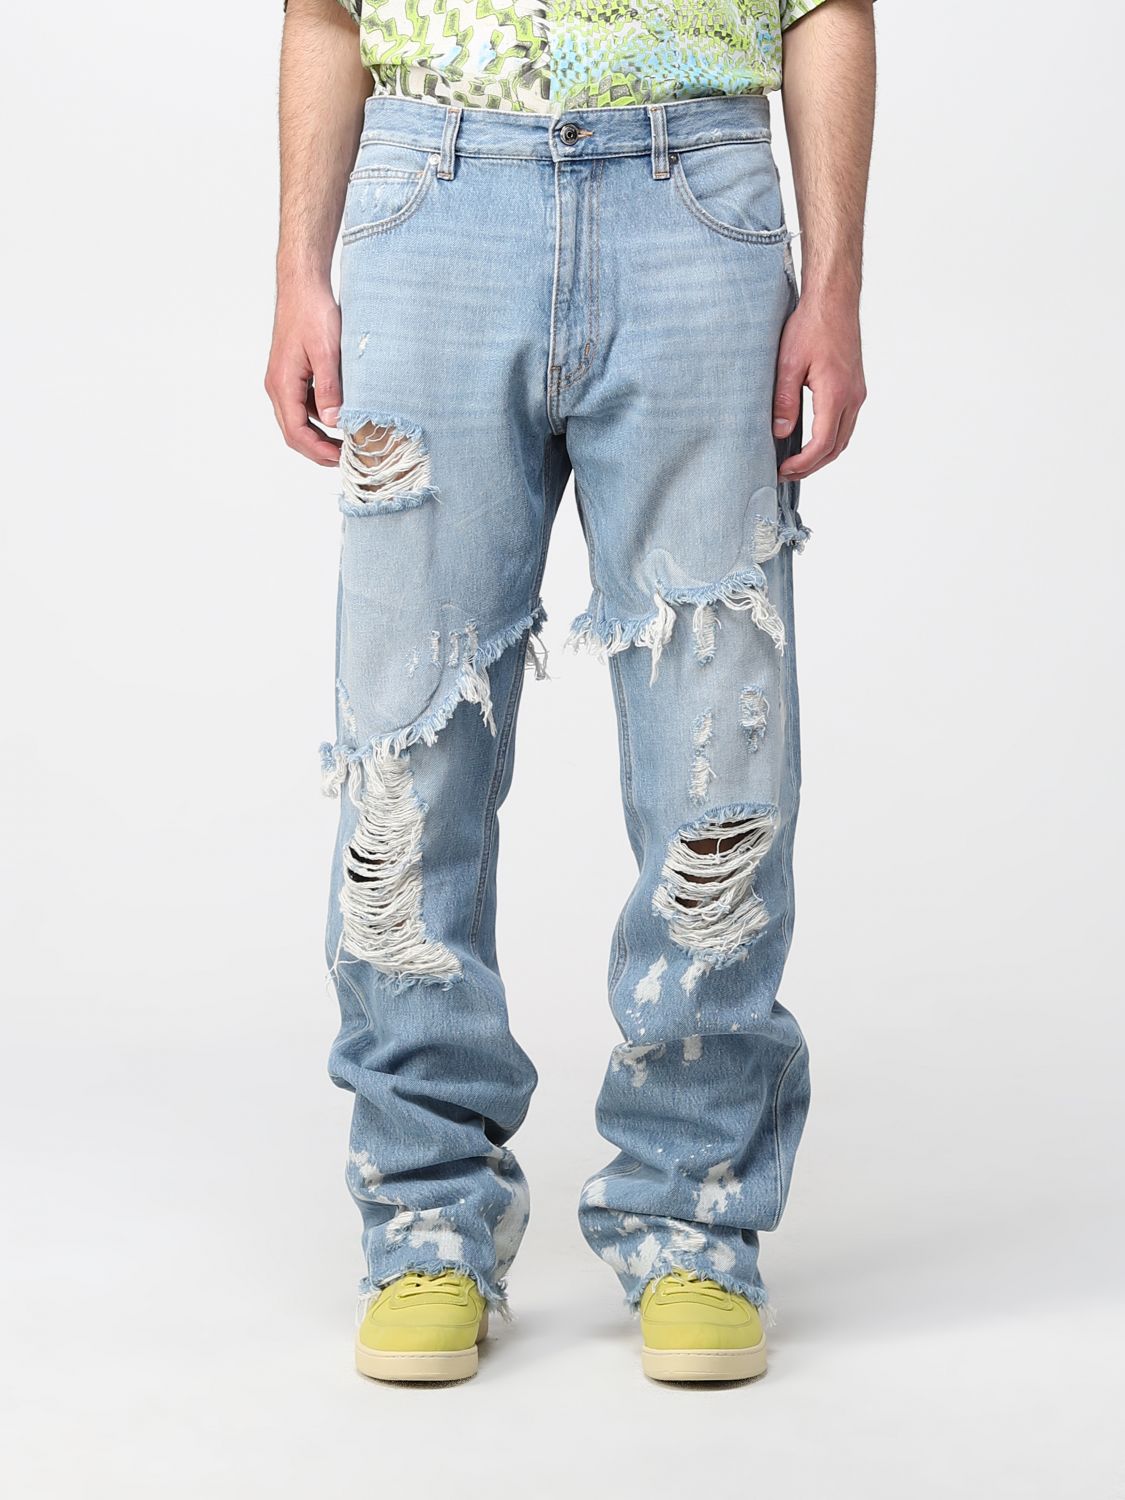 Subtropisch Gelijkenis zaad JUST CAVALLI: jeans in washed ripped denim - Denim | Just Cavalli jeans  S01LA0144N31990 online on GIGLIO.COM